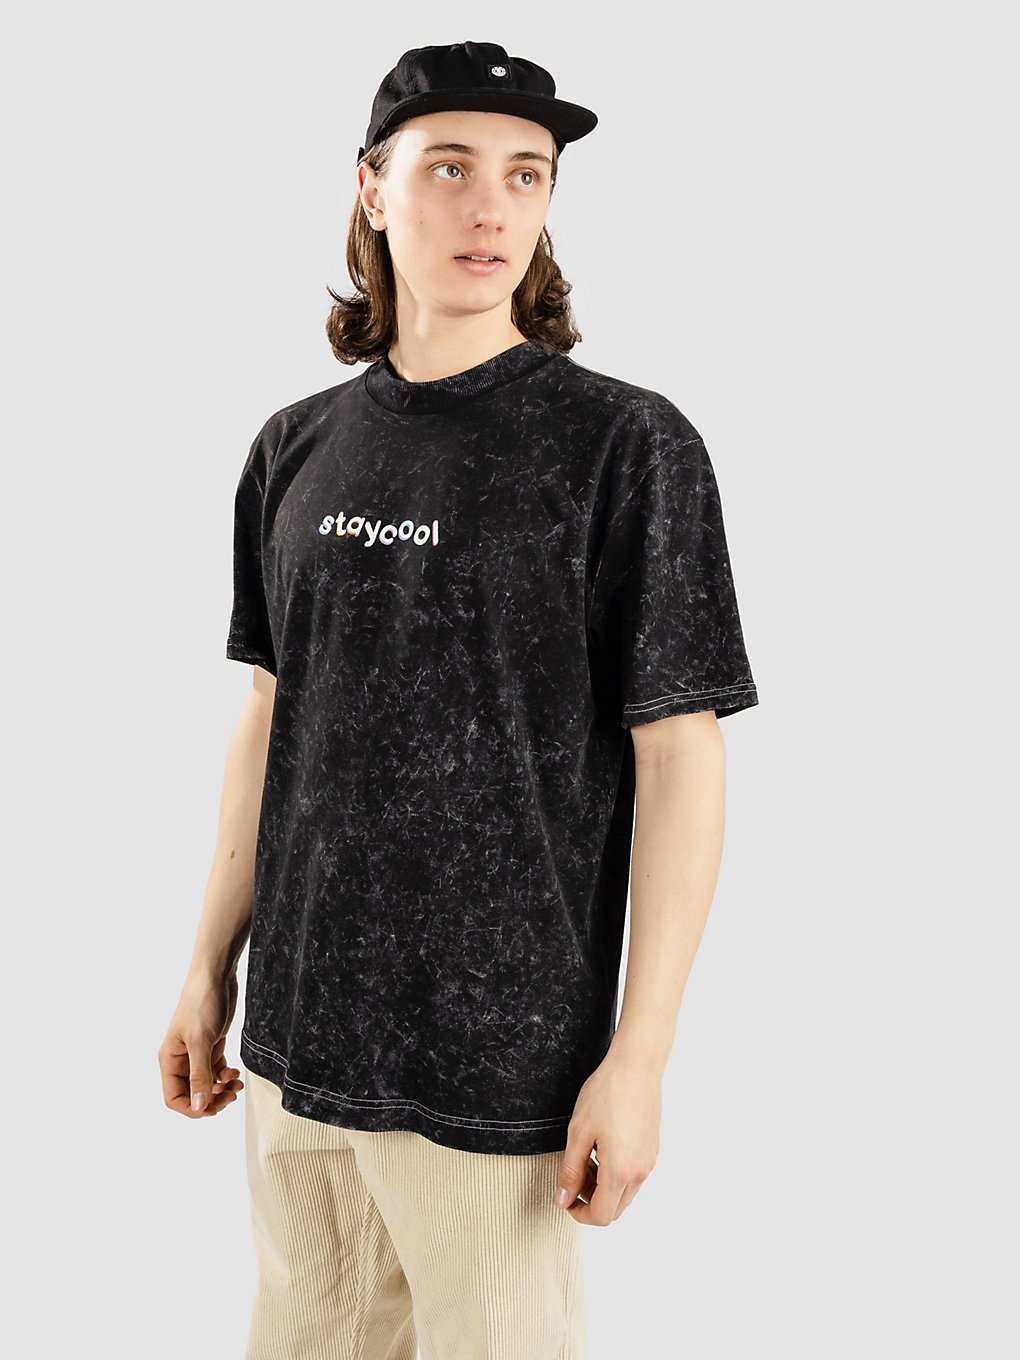 Staycoolnyc Classic T-Shirt black kaufen